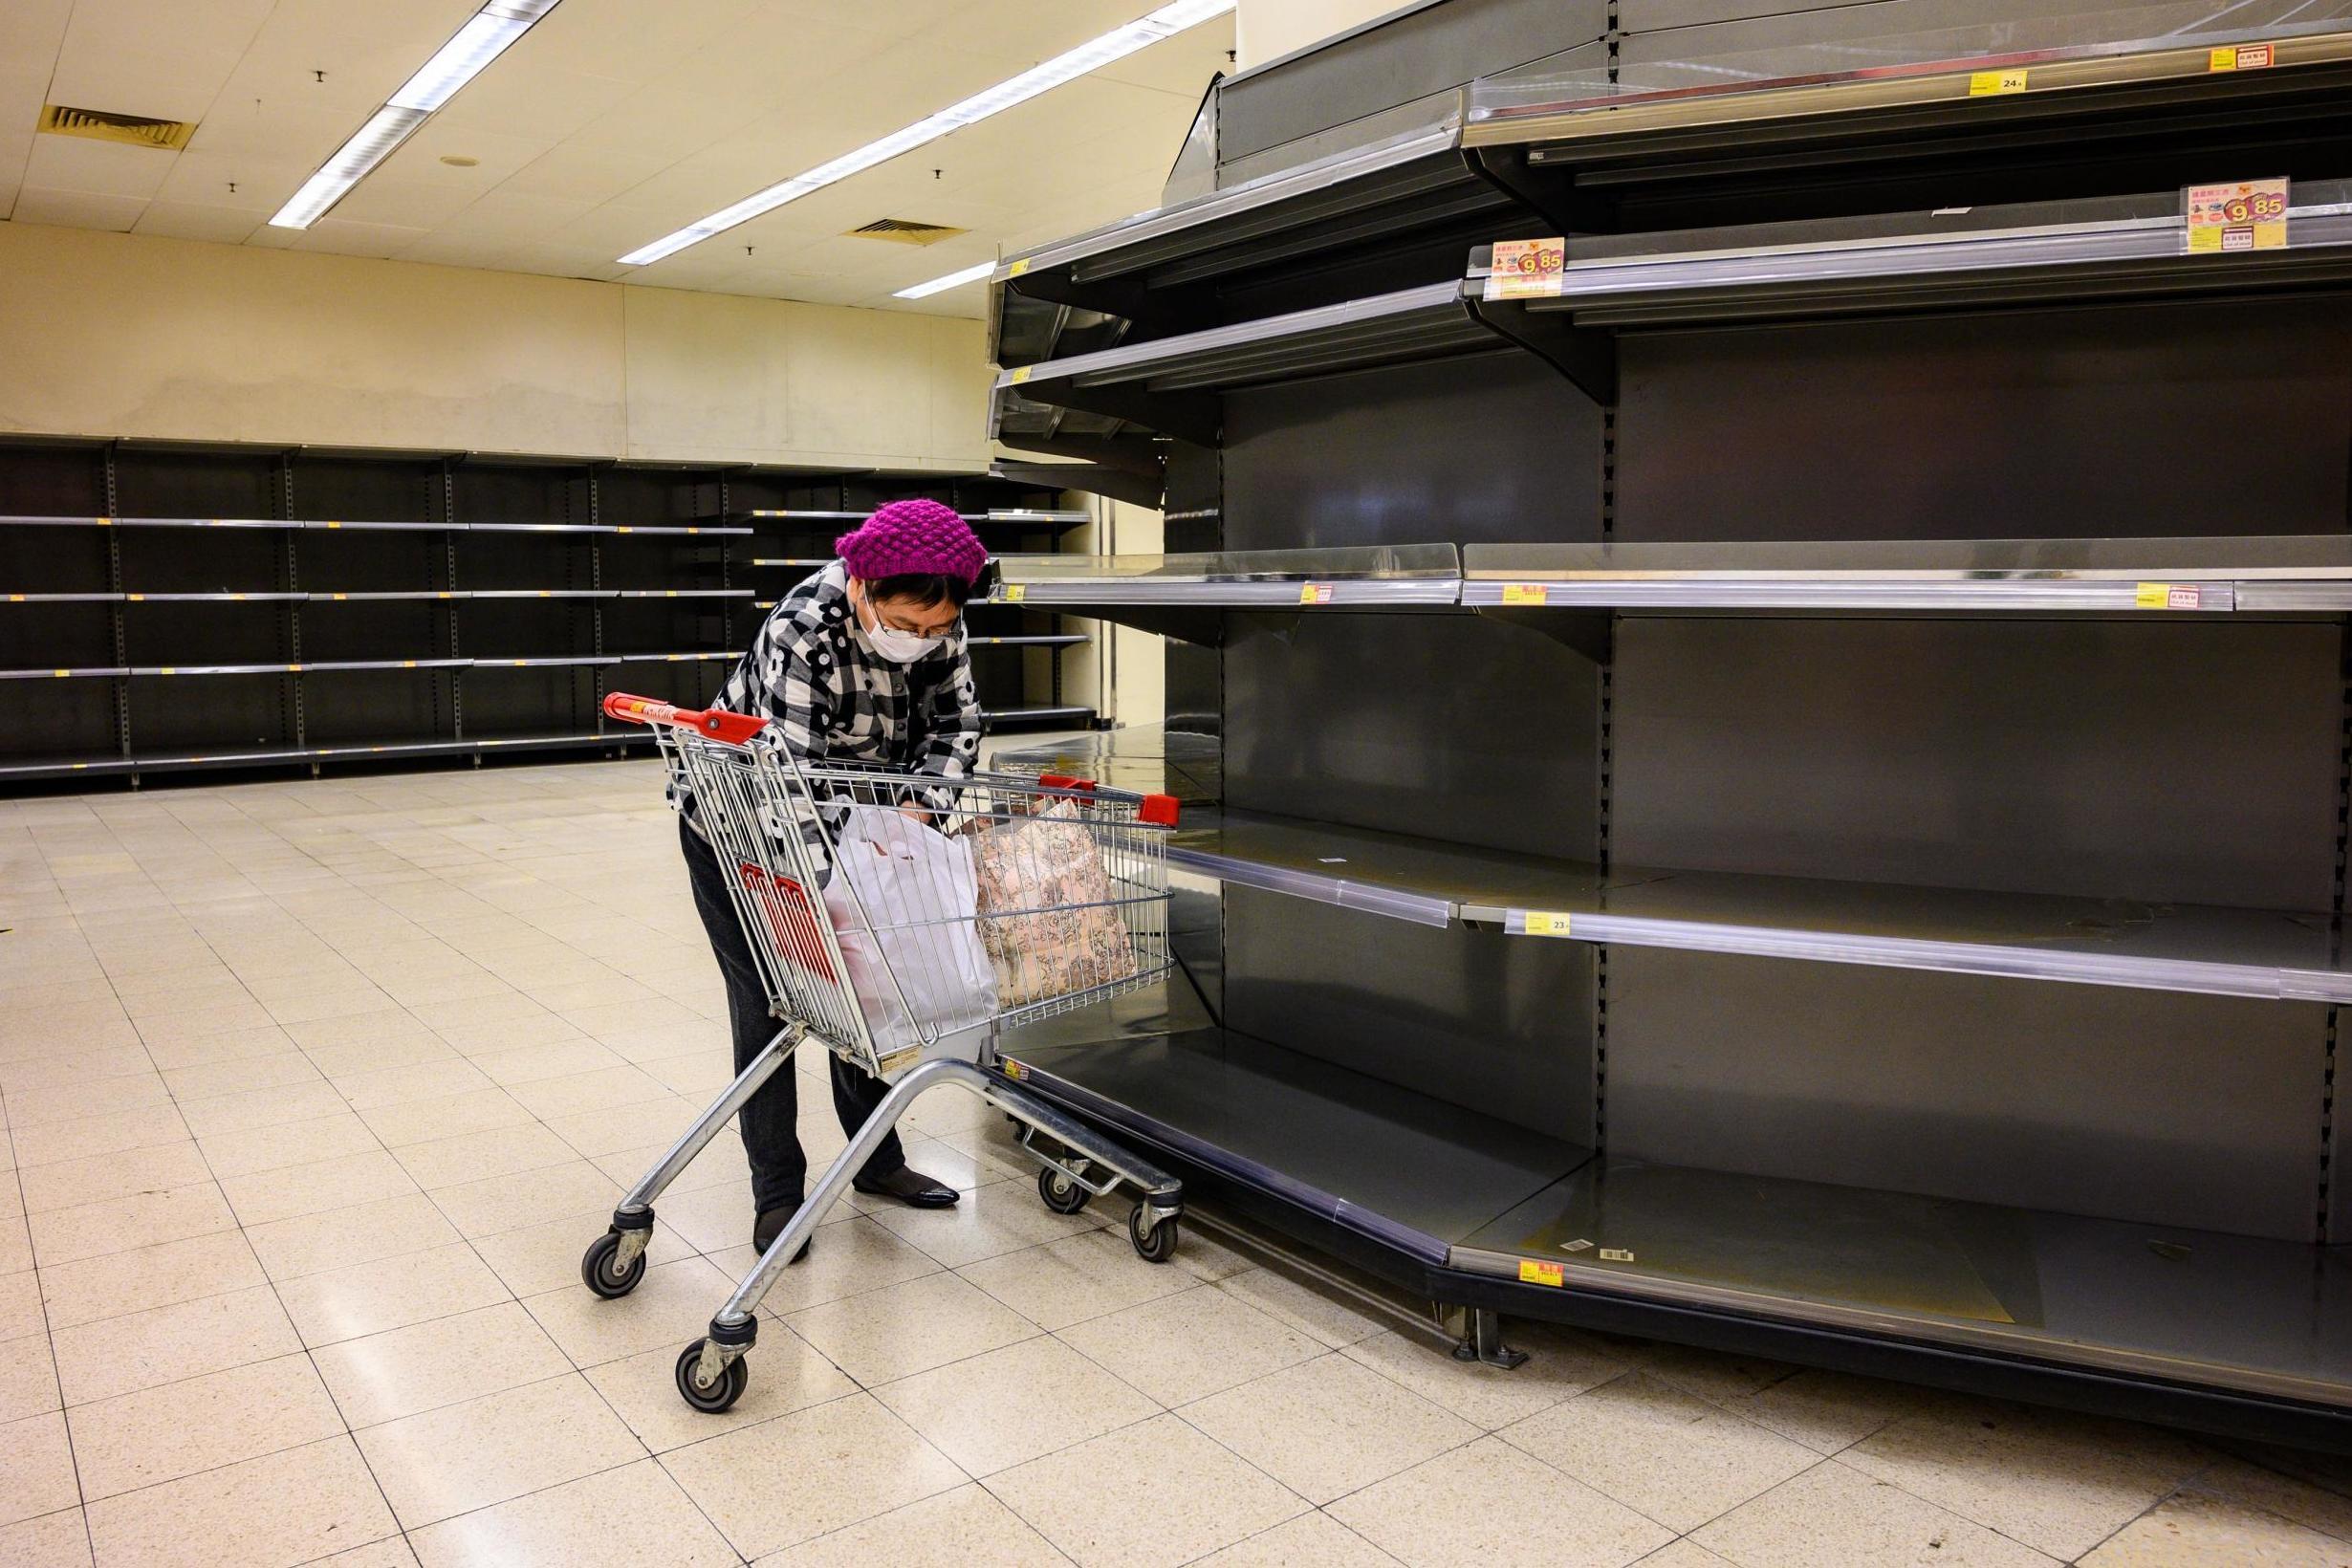 People are stockpiling food and supplies amid coronavirus fears